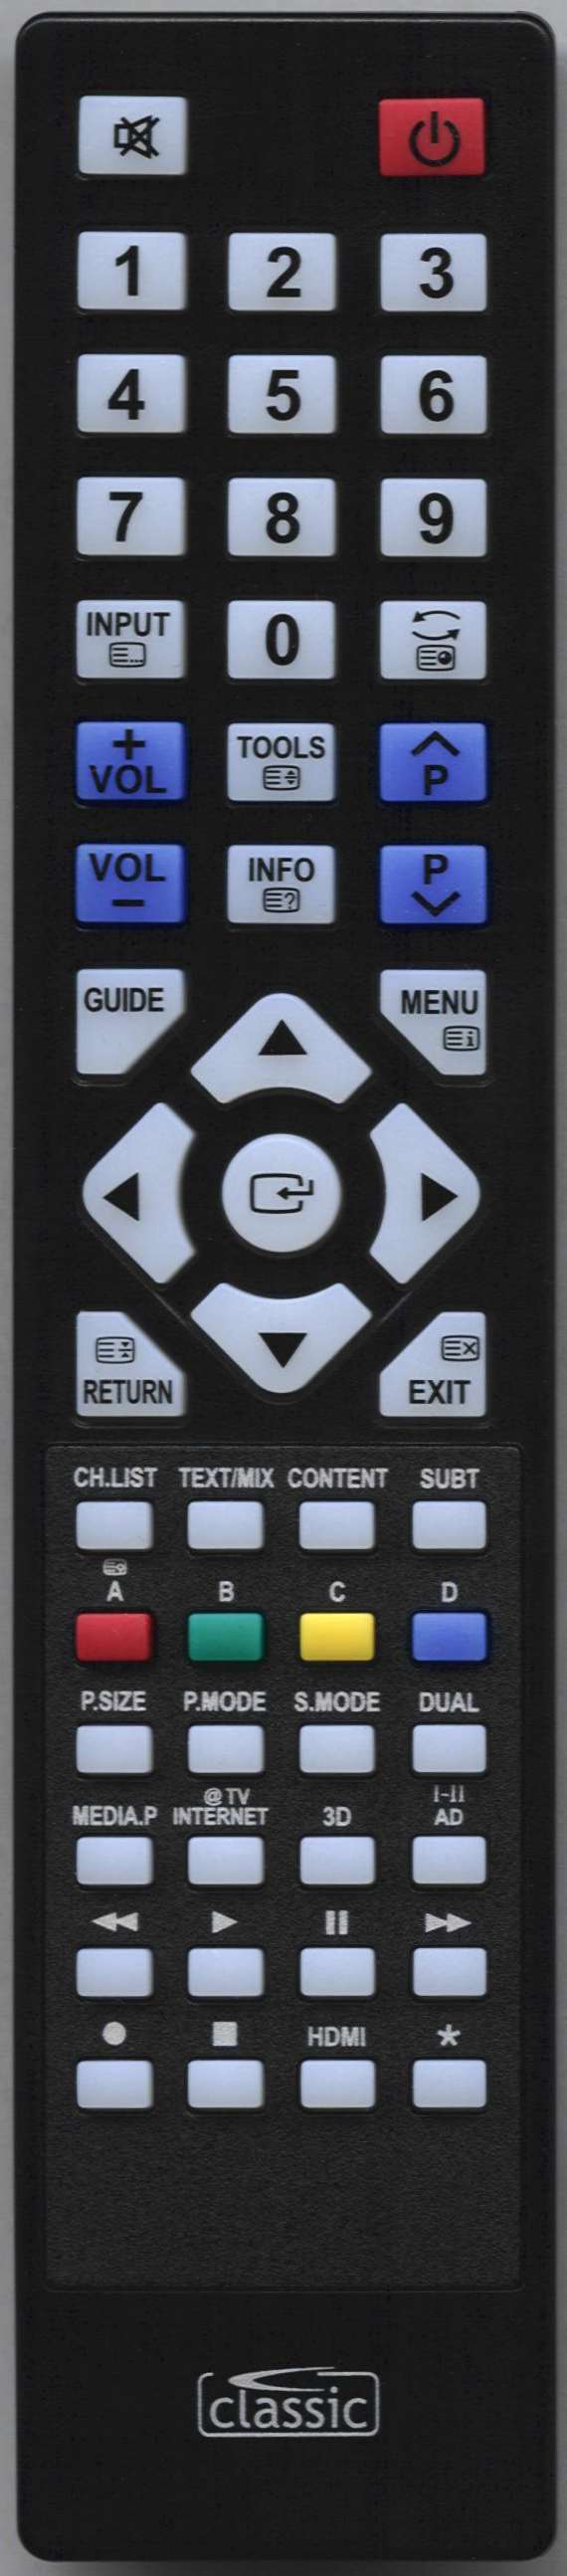 SAMSUNG PS58C6500TKXXU Remote Control Alternative